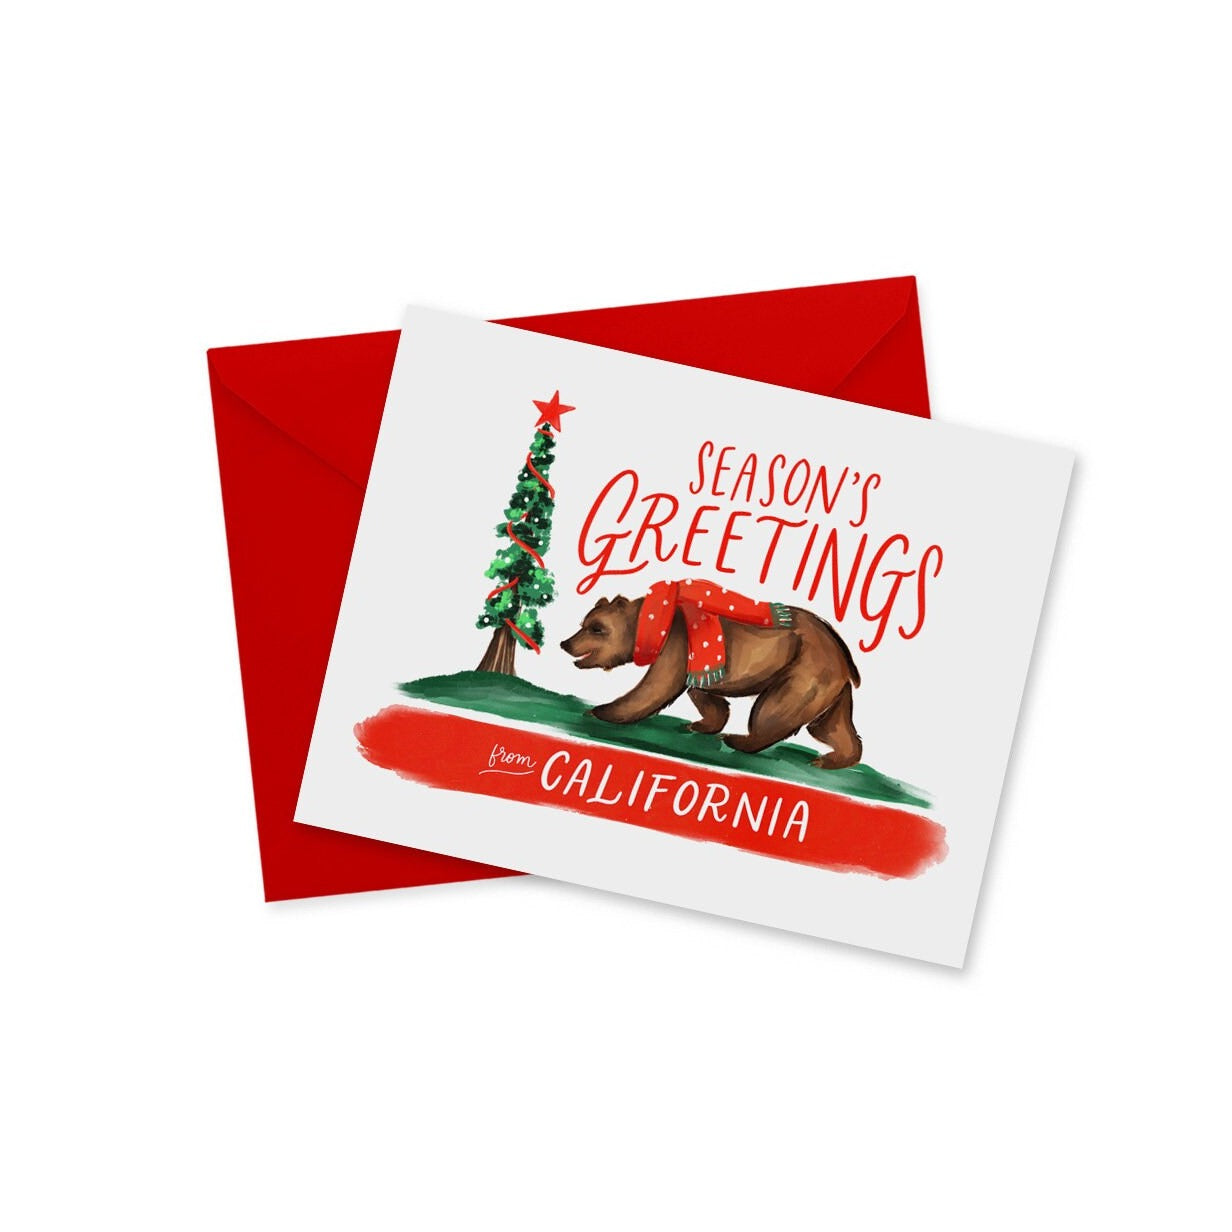 Greetings From California Holiday Greeting Card